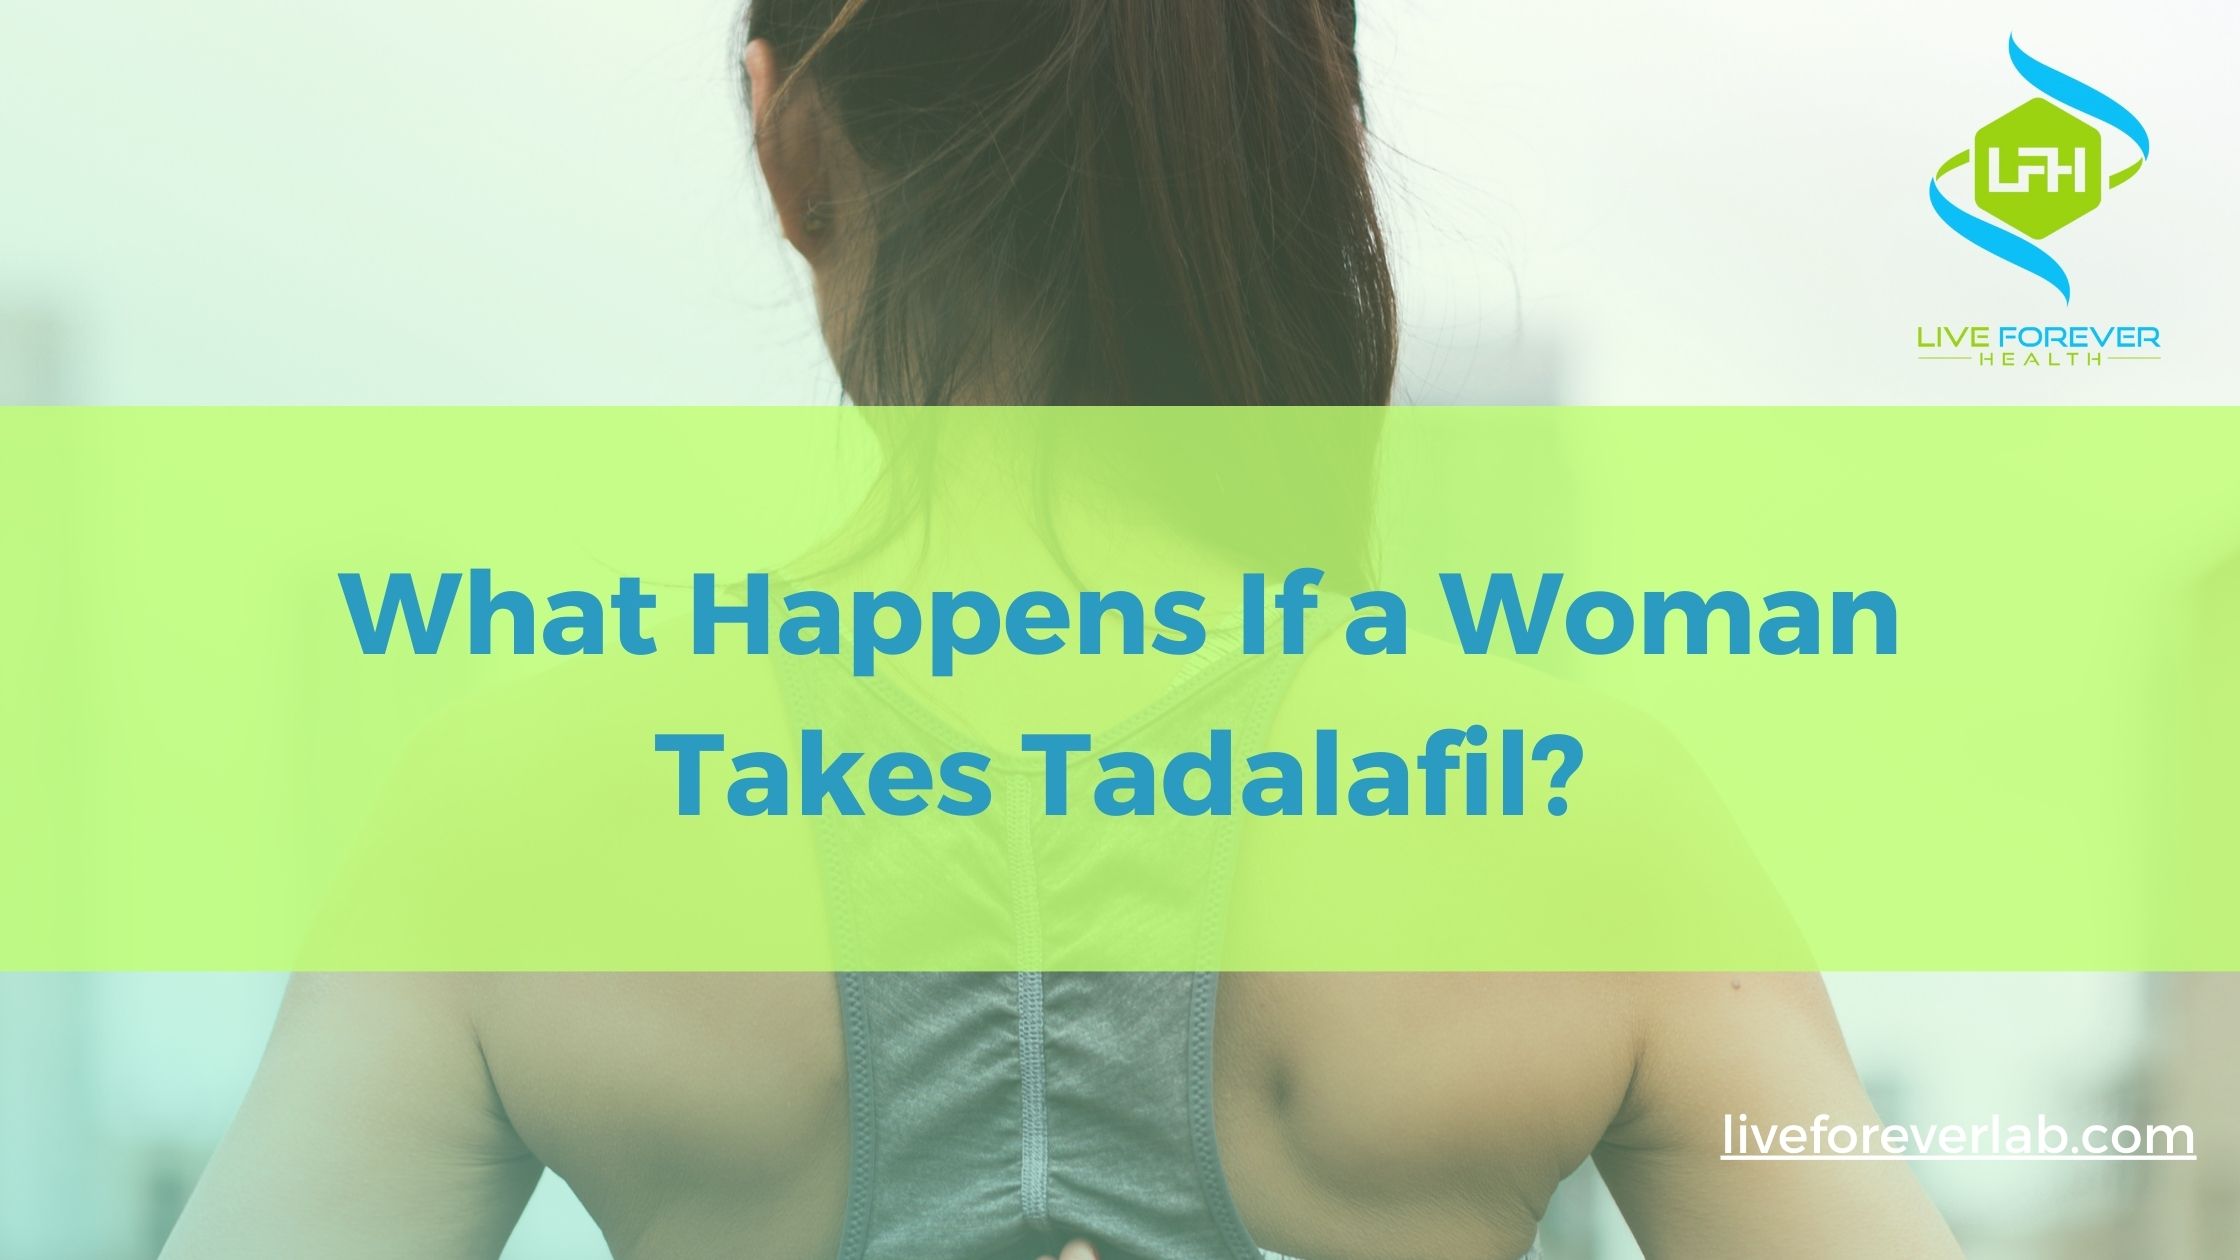 What Happens If a Woman Takes Tadalafil